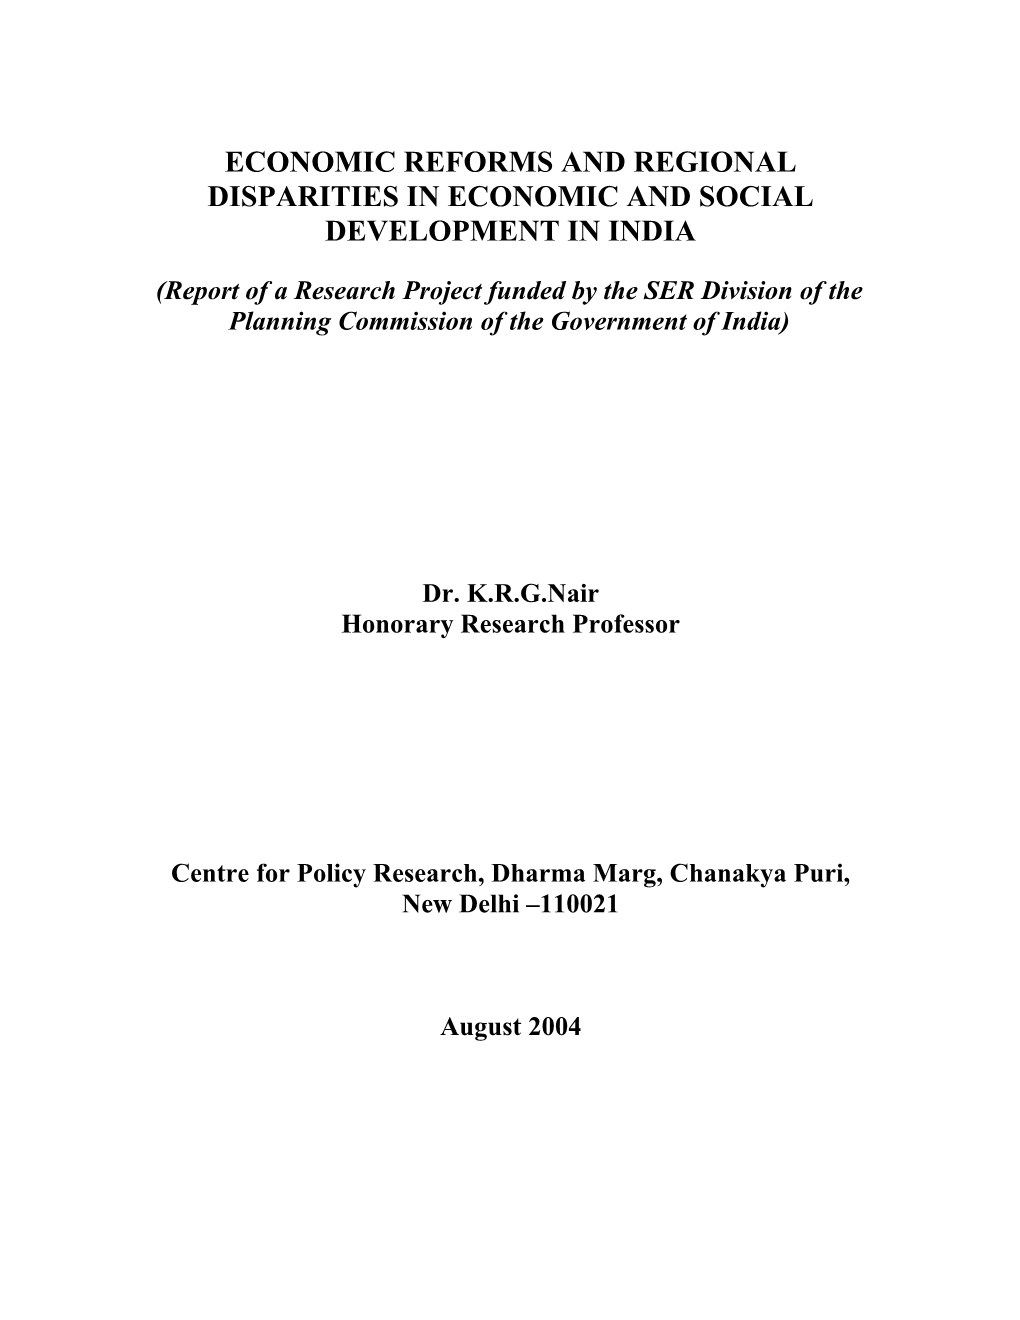 Economic Reforms and Regional Disparities in Economic and Social Development in India